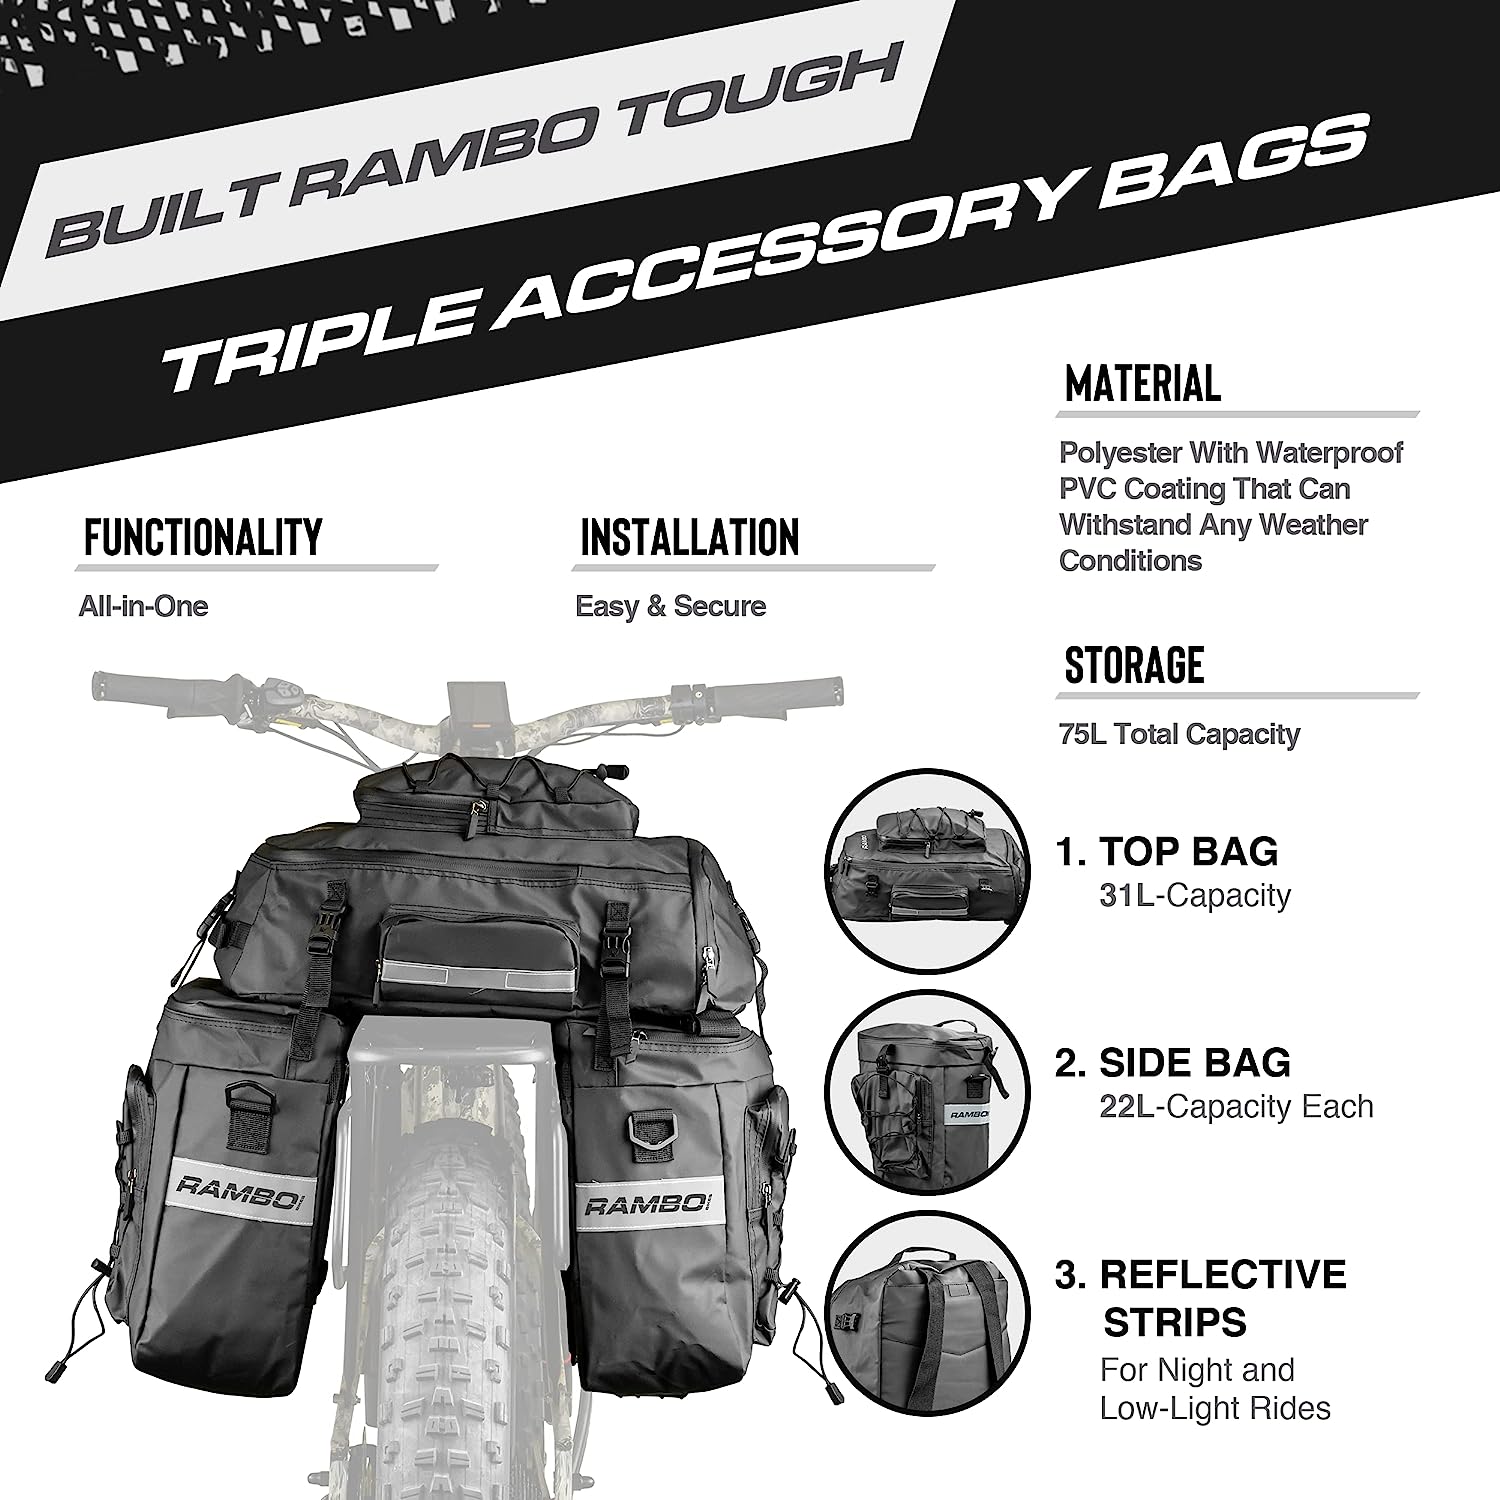 Rambo Bikes Triple Accessory Bag Review